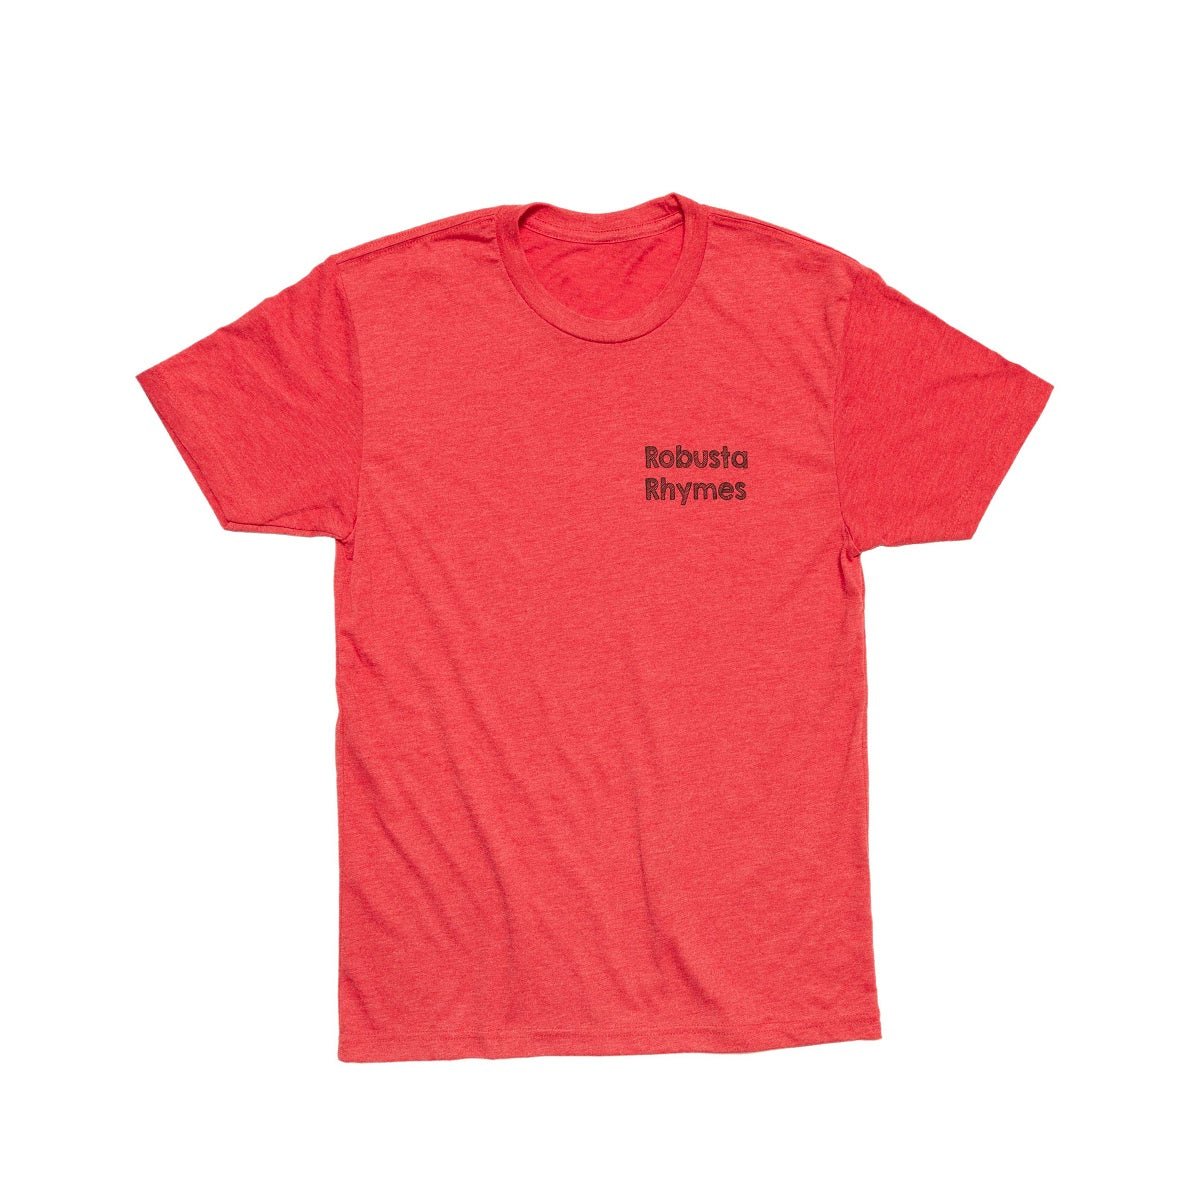 Robusta Rhymes T-Shirt - Saint Anthony Industries